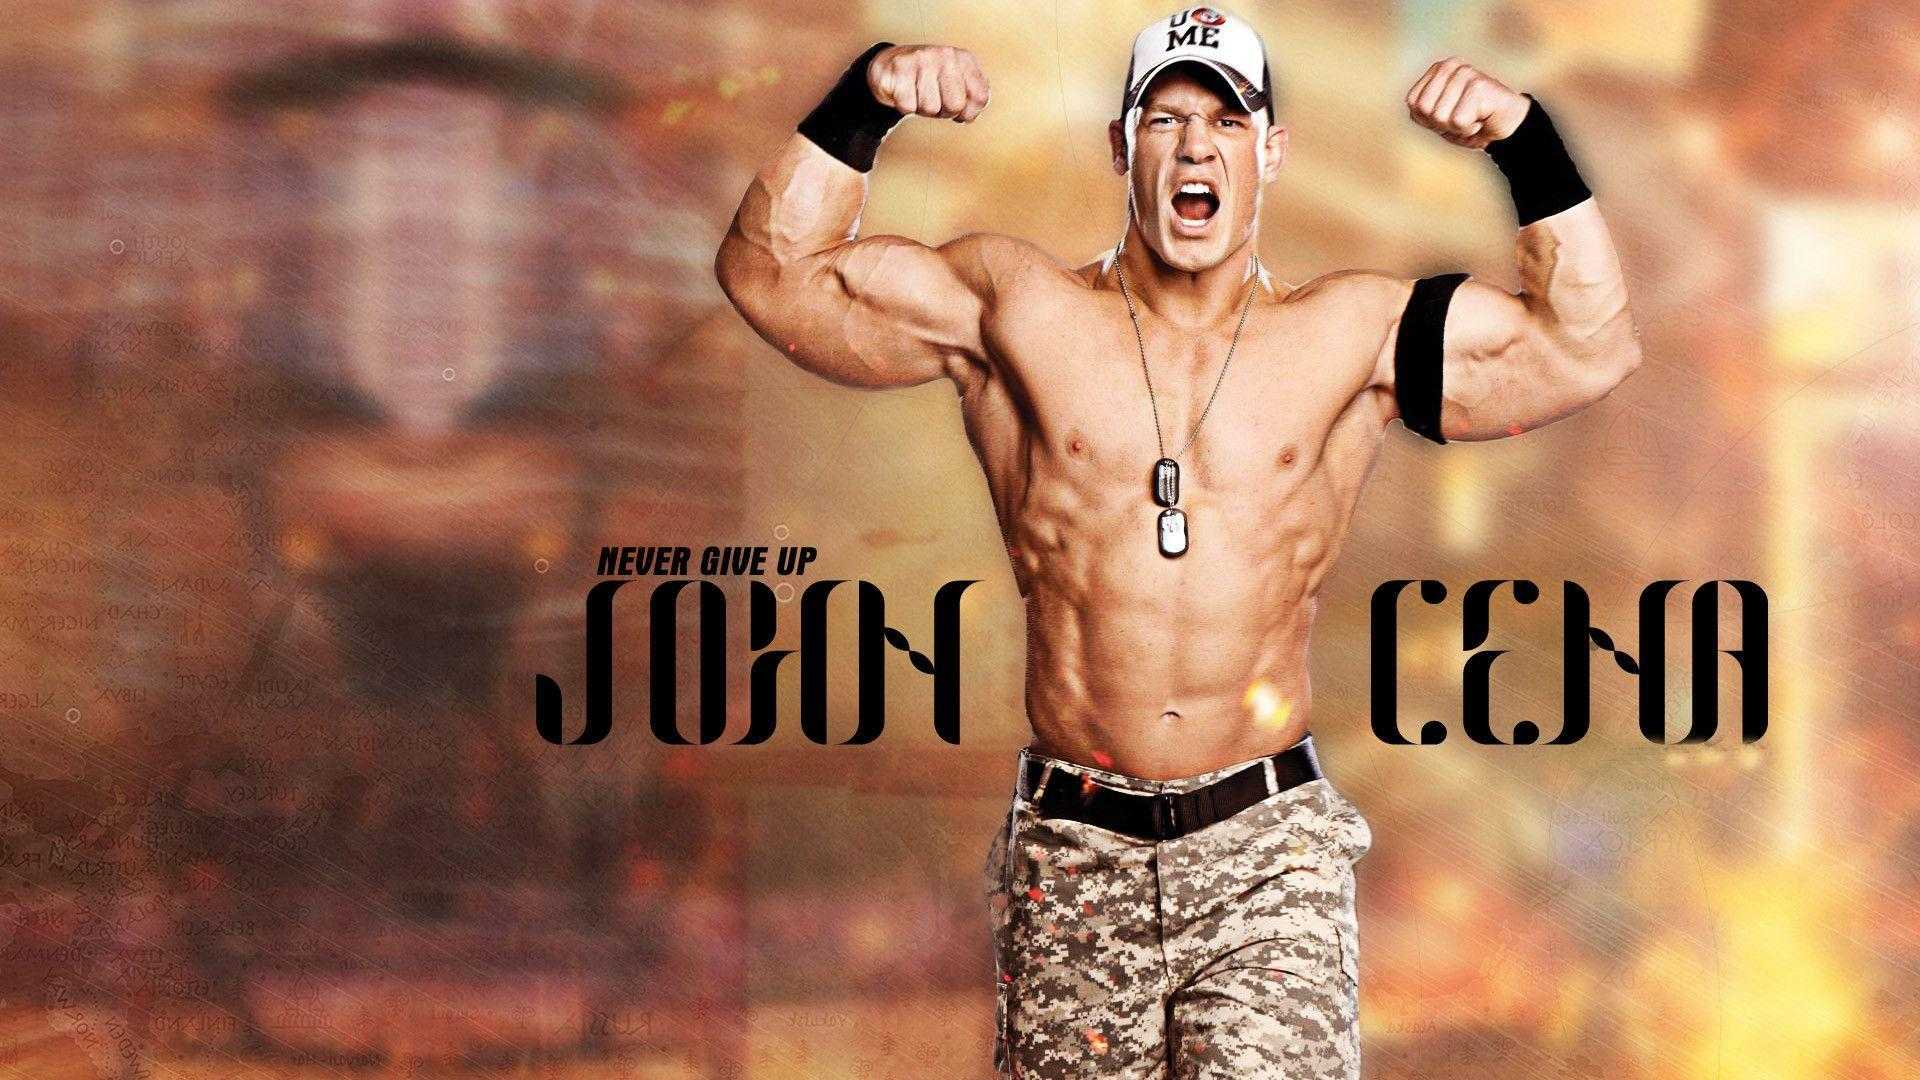 John Cena Full HD Image In 2018 Computer For Mobile Wwe Wallpaper